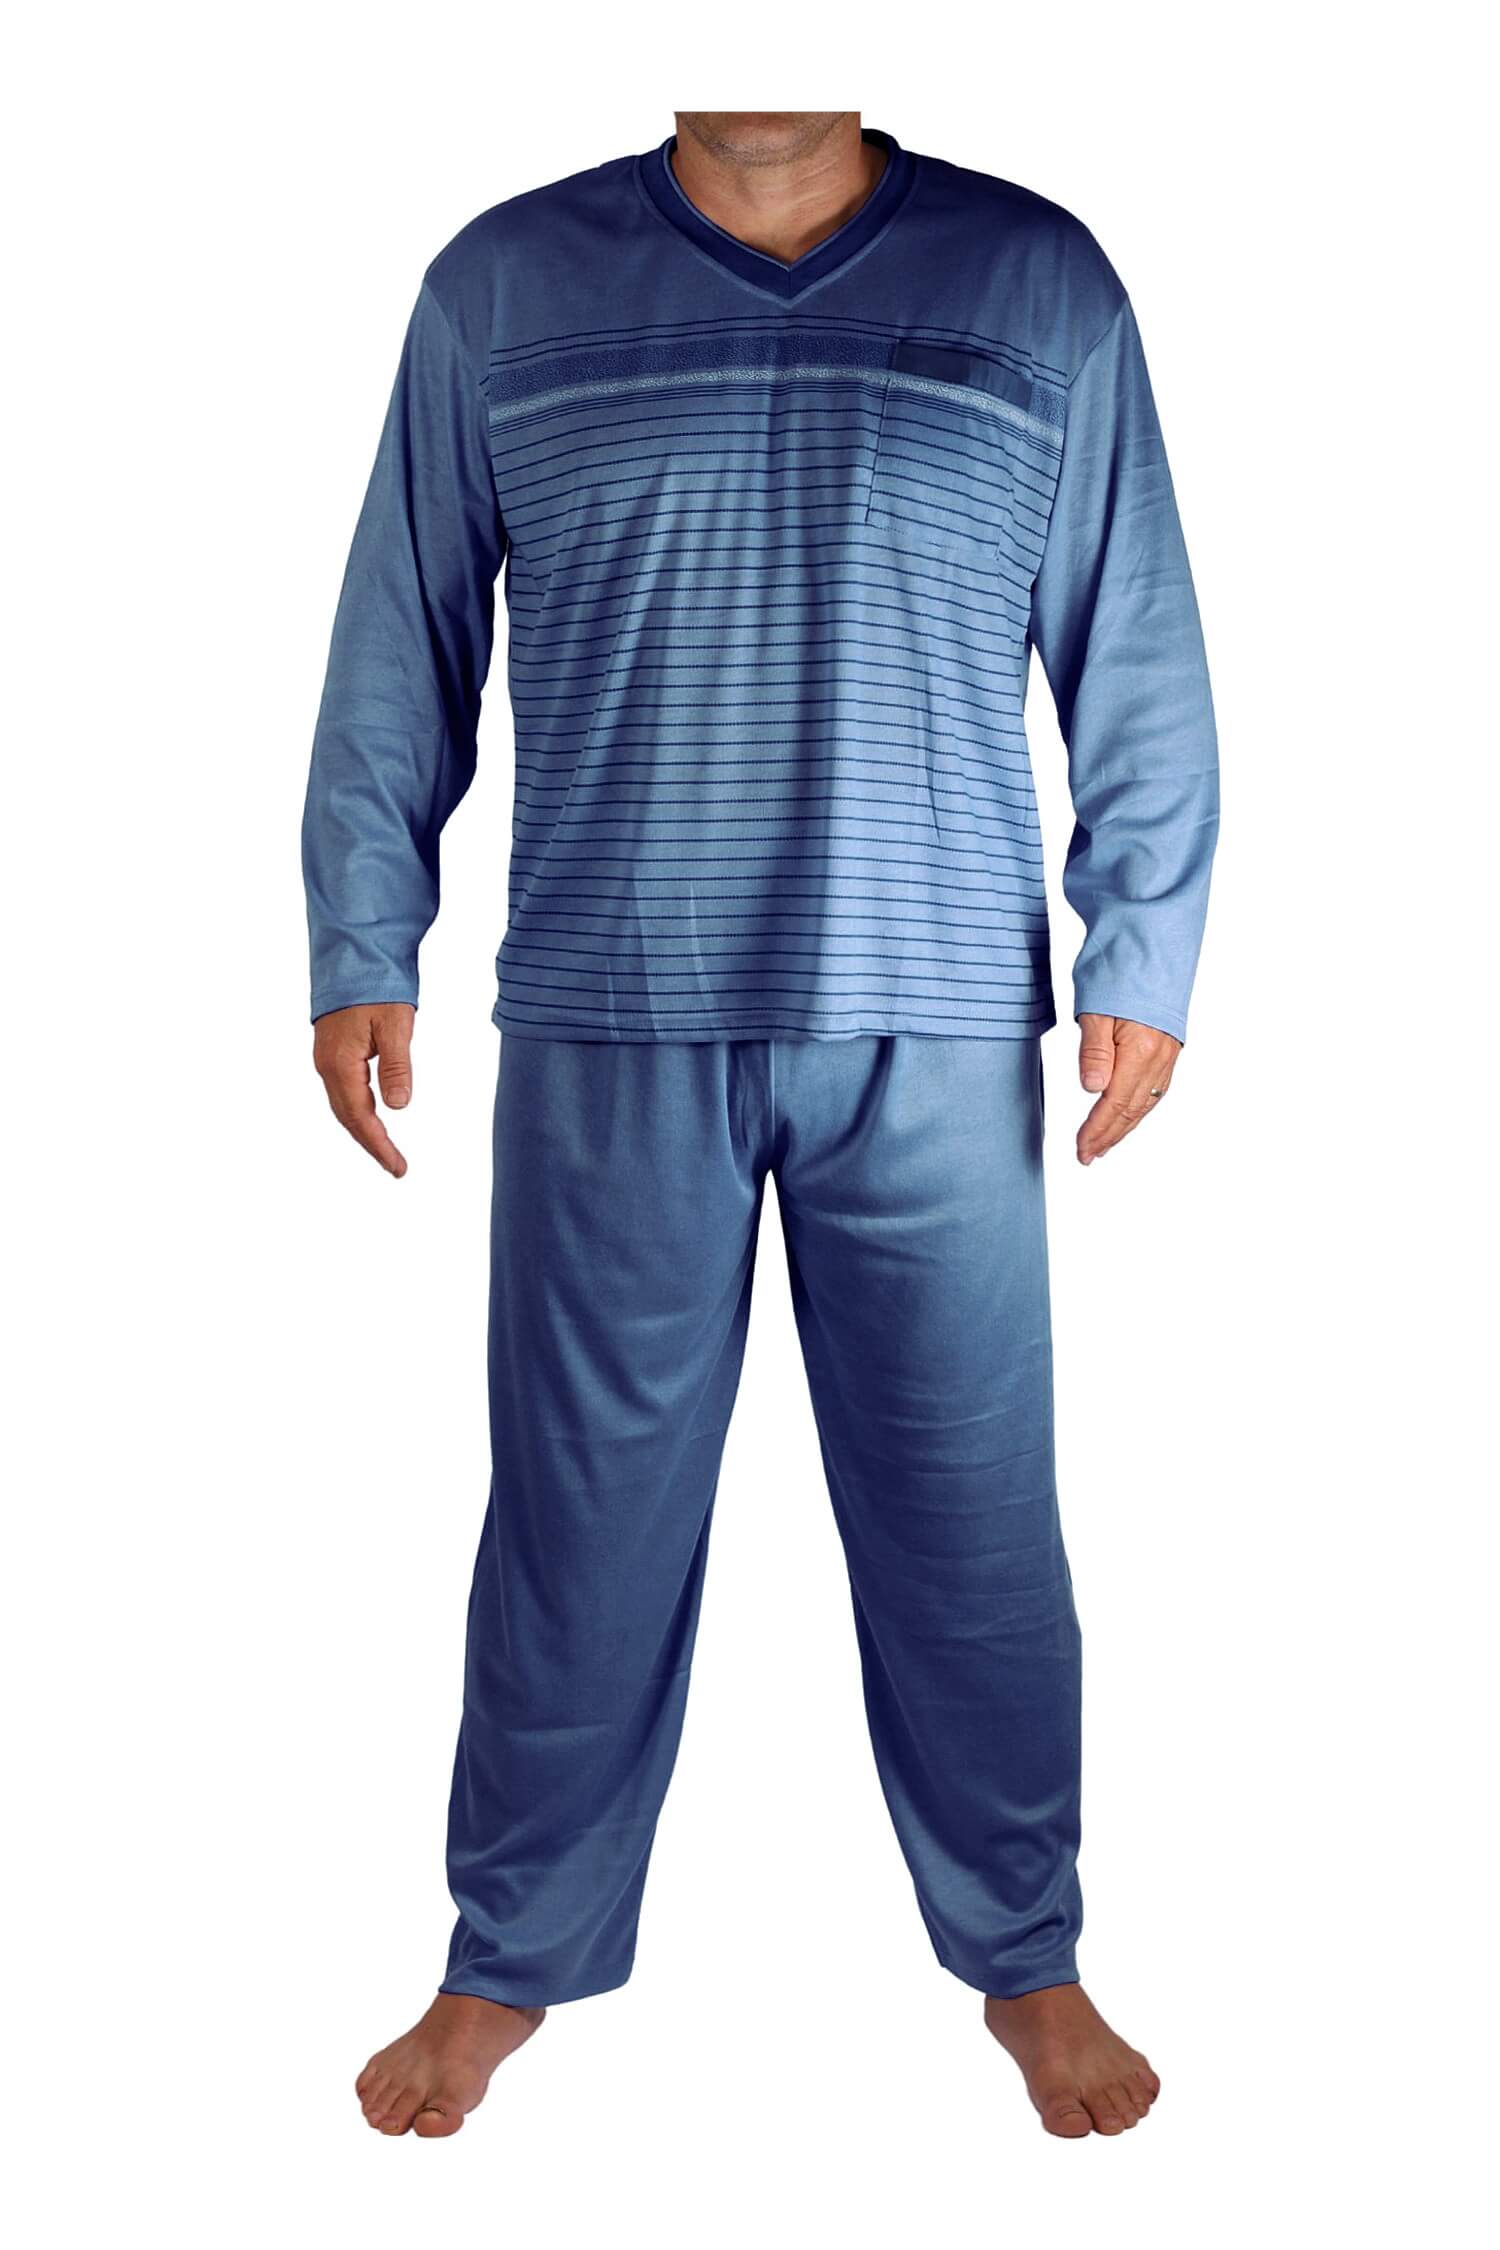 Standa pyžamo pánské dlouhé V2401 3XL šedomodrá